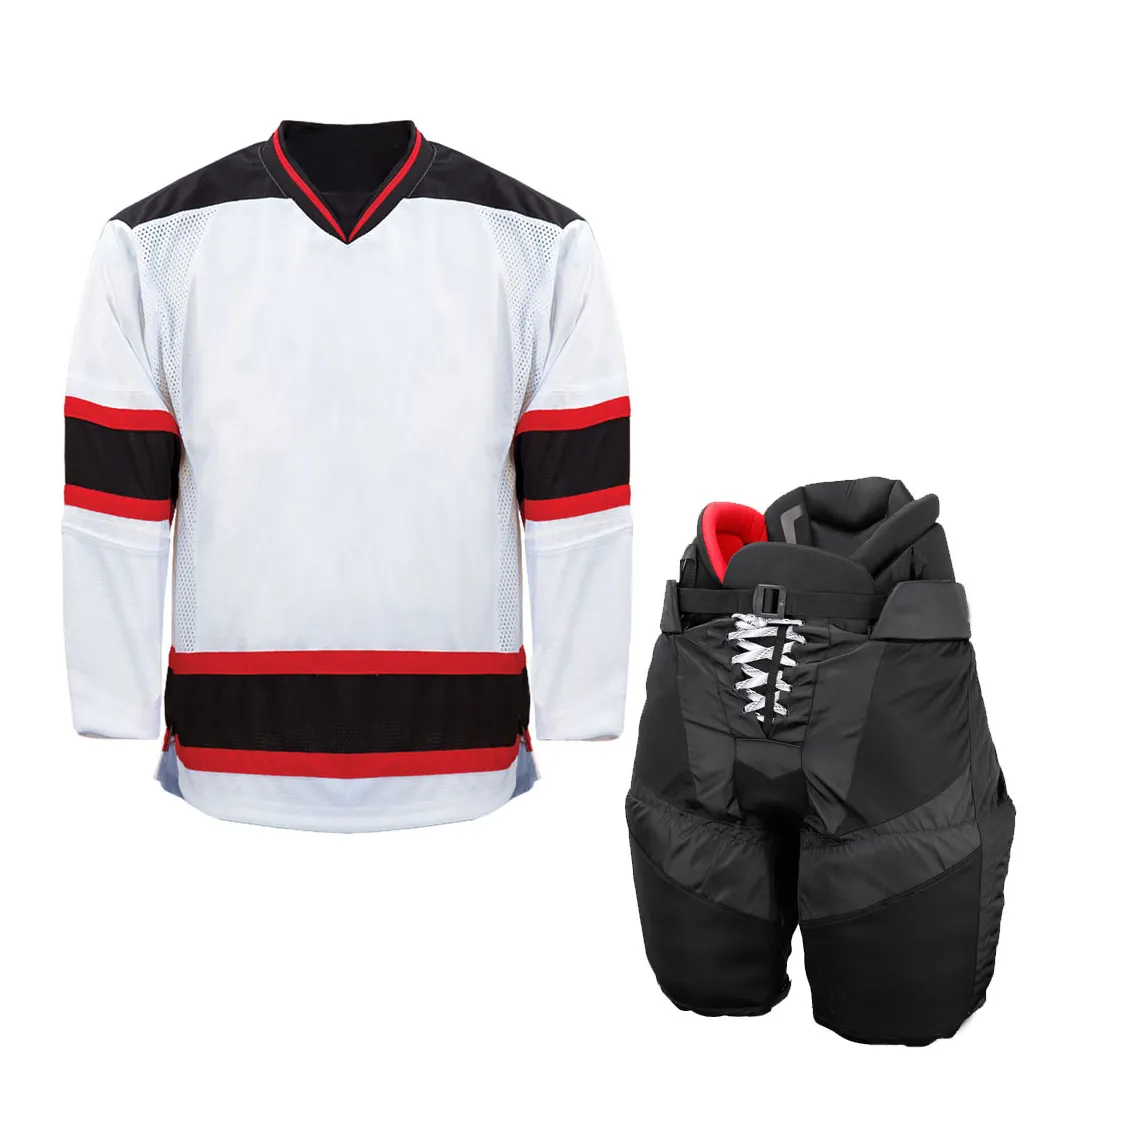 Wholesale Good Quality Team Sports Sublimation Ice Hockey Uniform,Best Price Ice Hockey Uniform Your Own Sublimation Ice Hockey